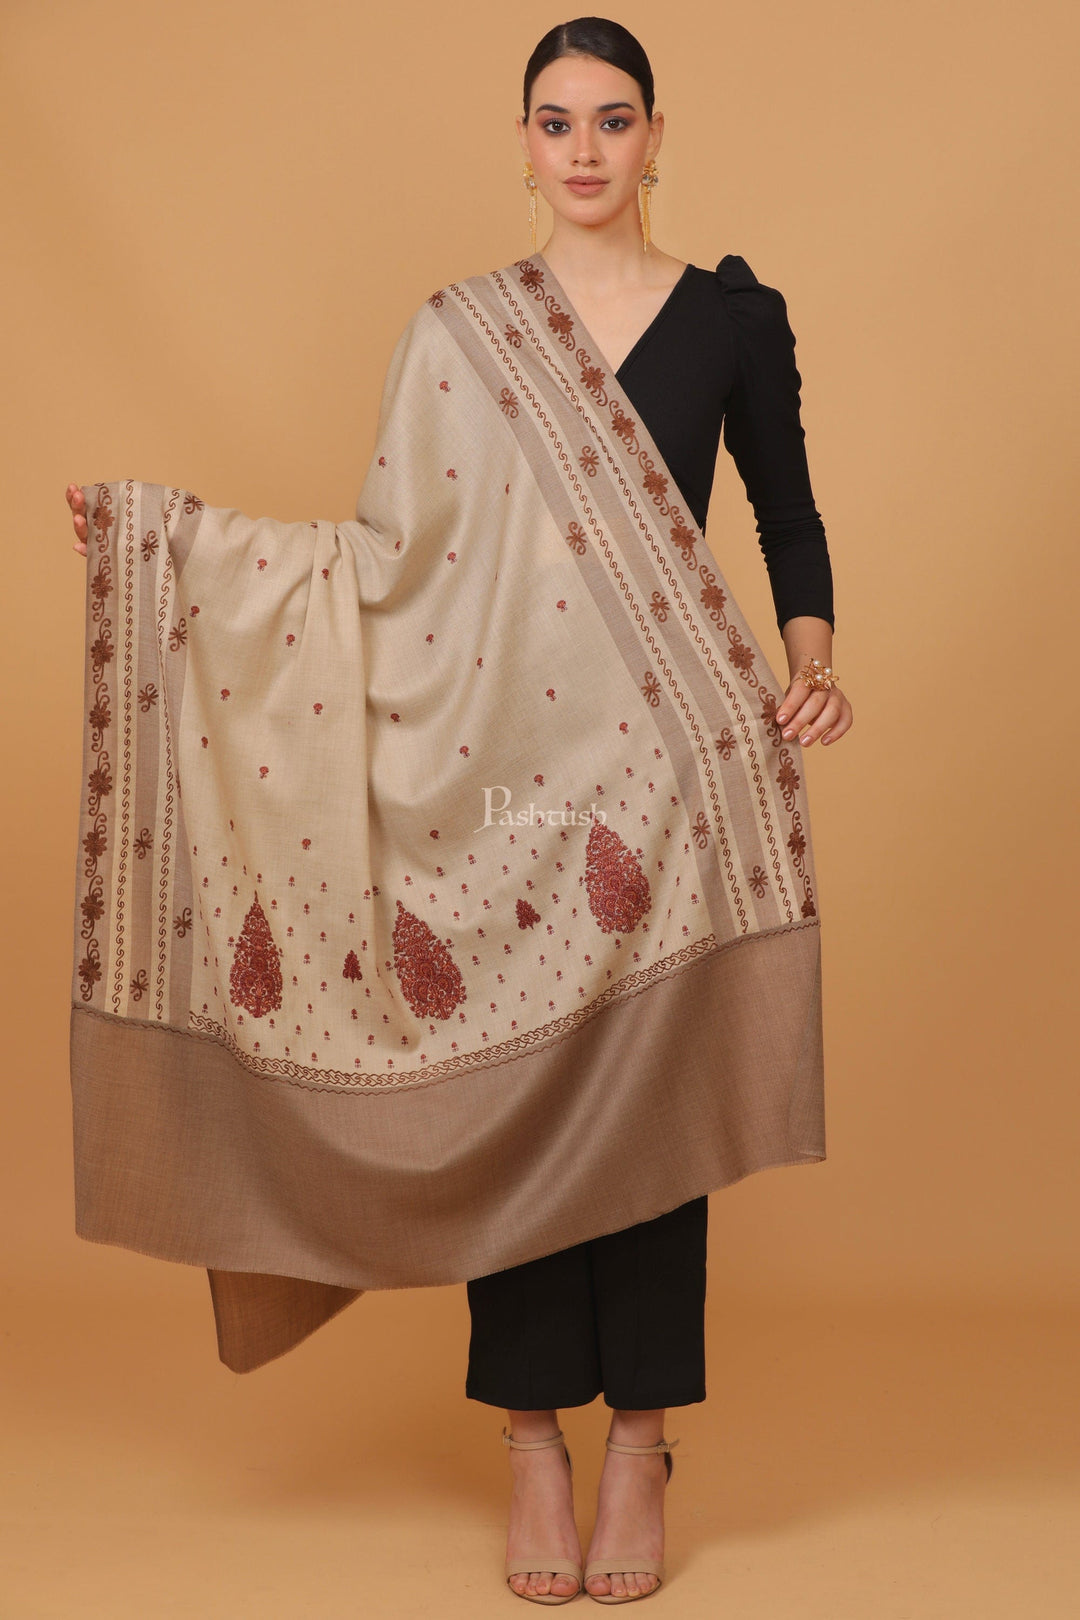 Pashtush India Womens Stoles and Scarves Scarf Pashtush womens Fine Wool shawl, pasiley design, Beige